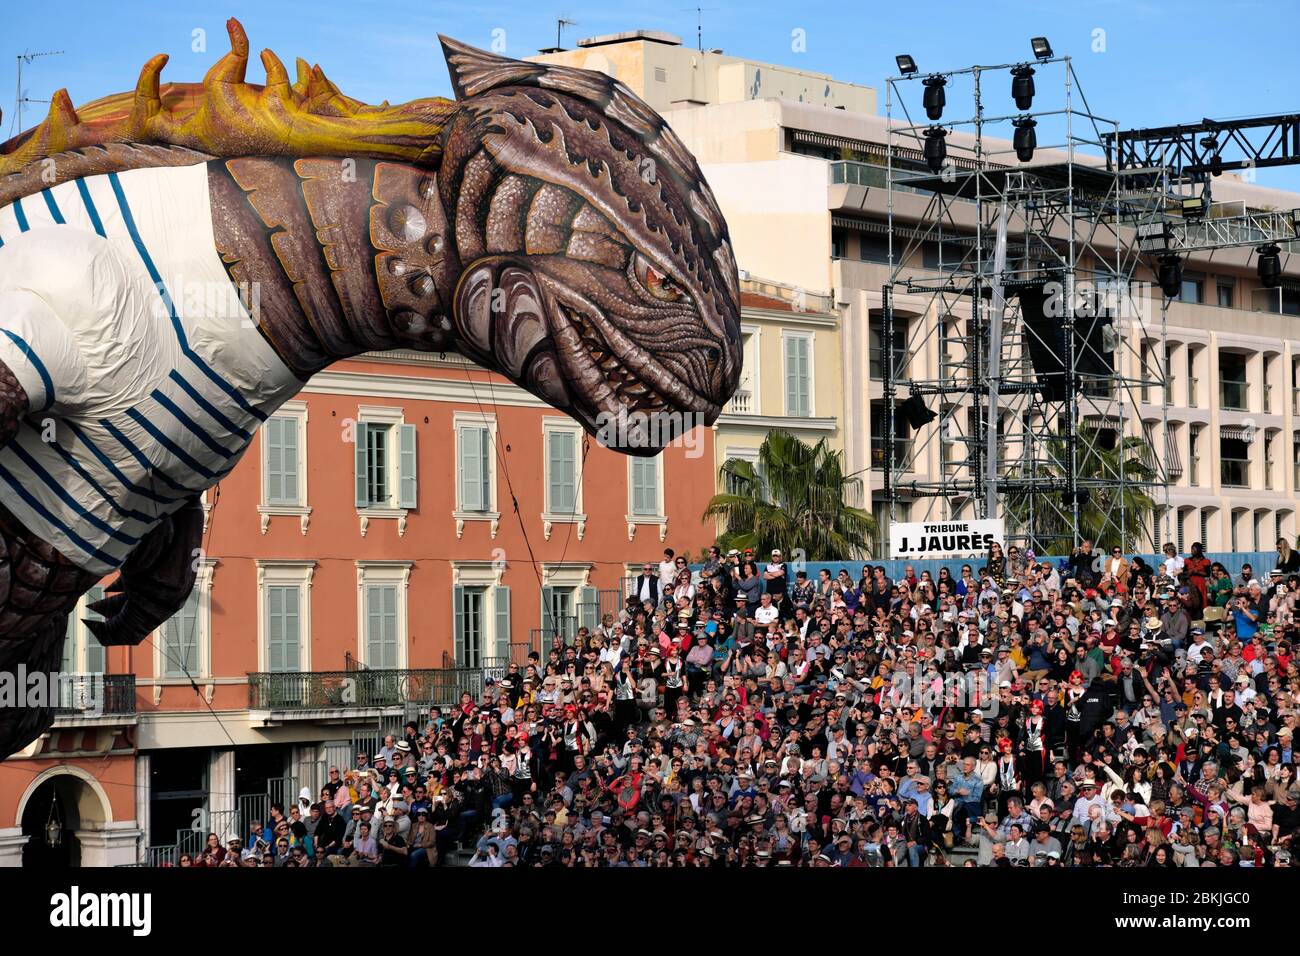 France, Alpes Maritimes, Nice, Place Massena, Carnaval de Nice, Bataille de fleurs, parade, grandstand, giant inflatable structure Stock Photo